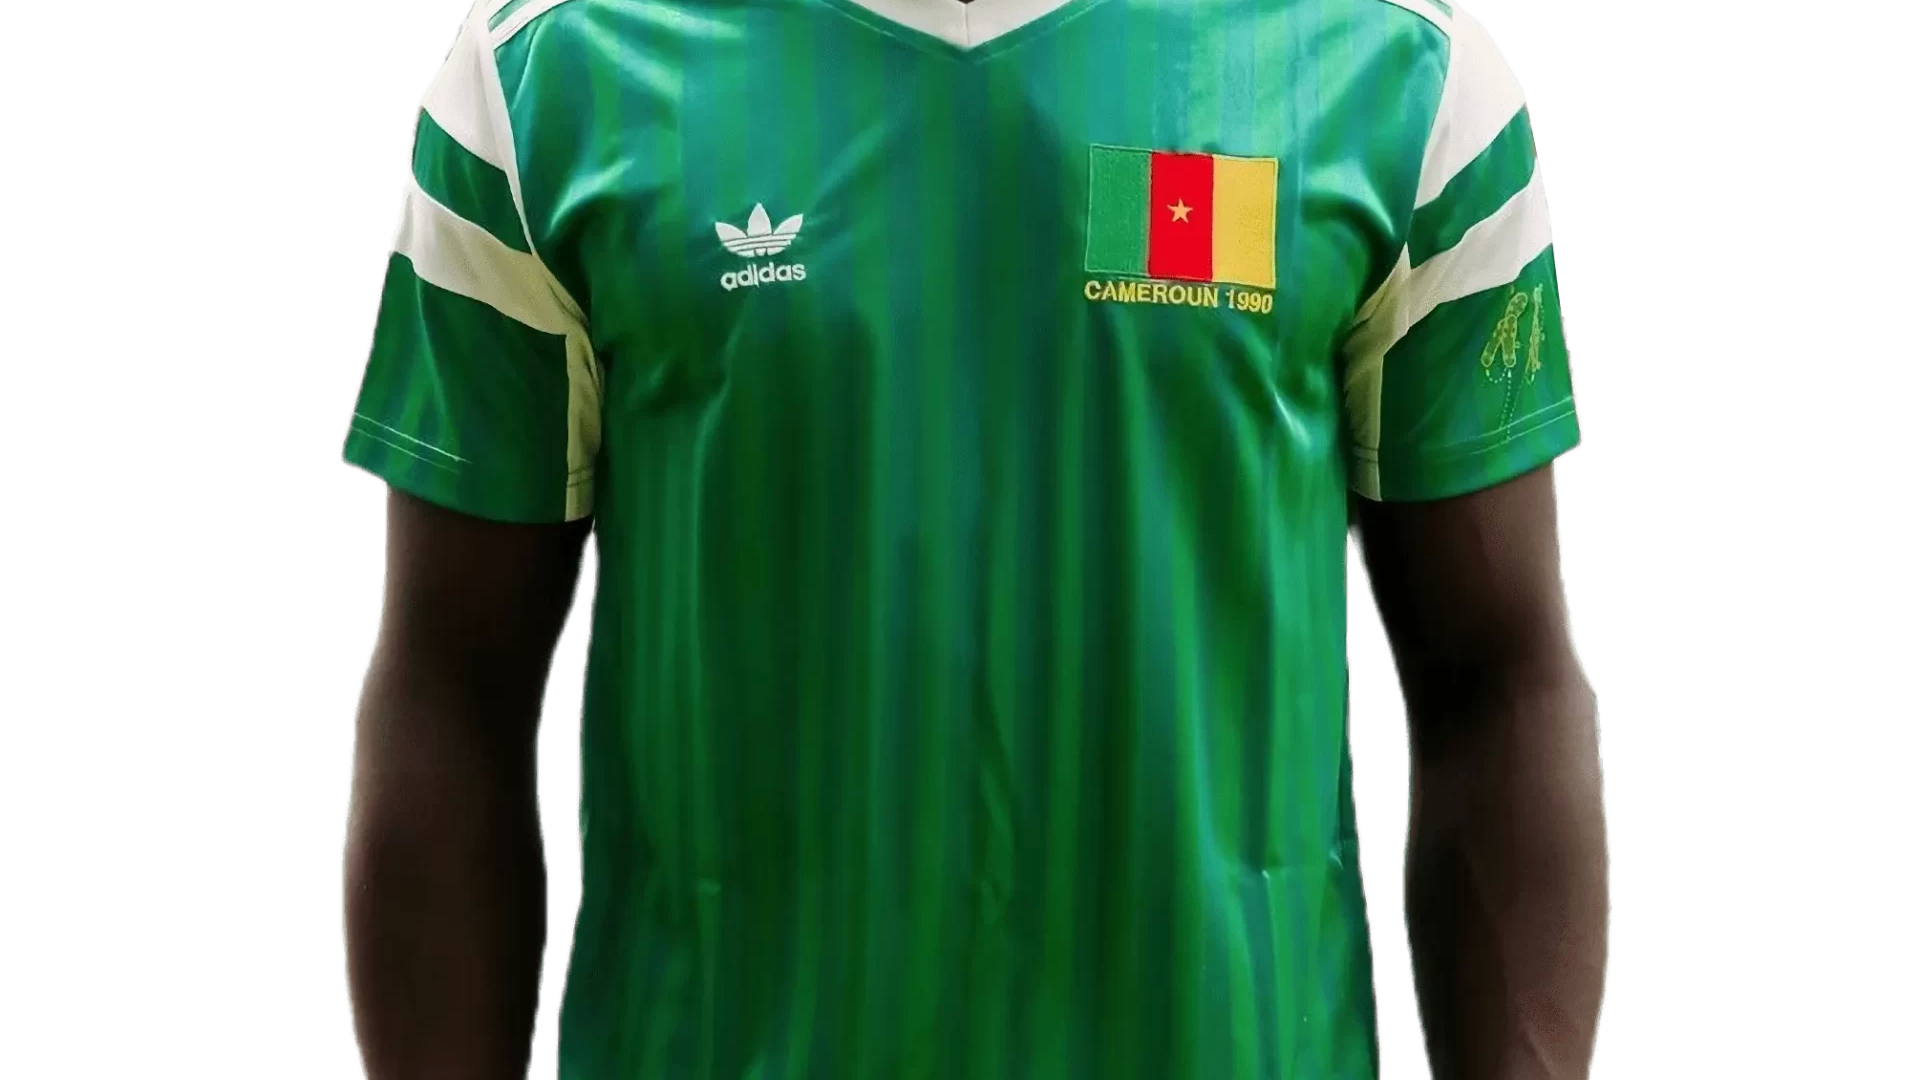 Men's 2006 Cameroon '90 Dancing Lion Jersey by Adidas: Intelligent (EnLawded.com file #lmchk62092ip2y123312kg9st)